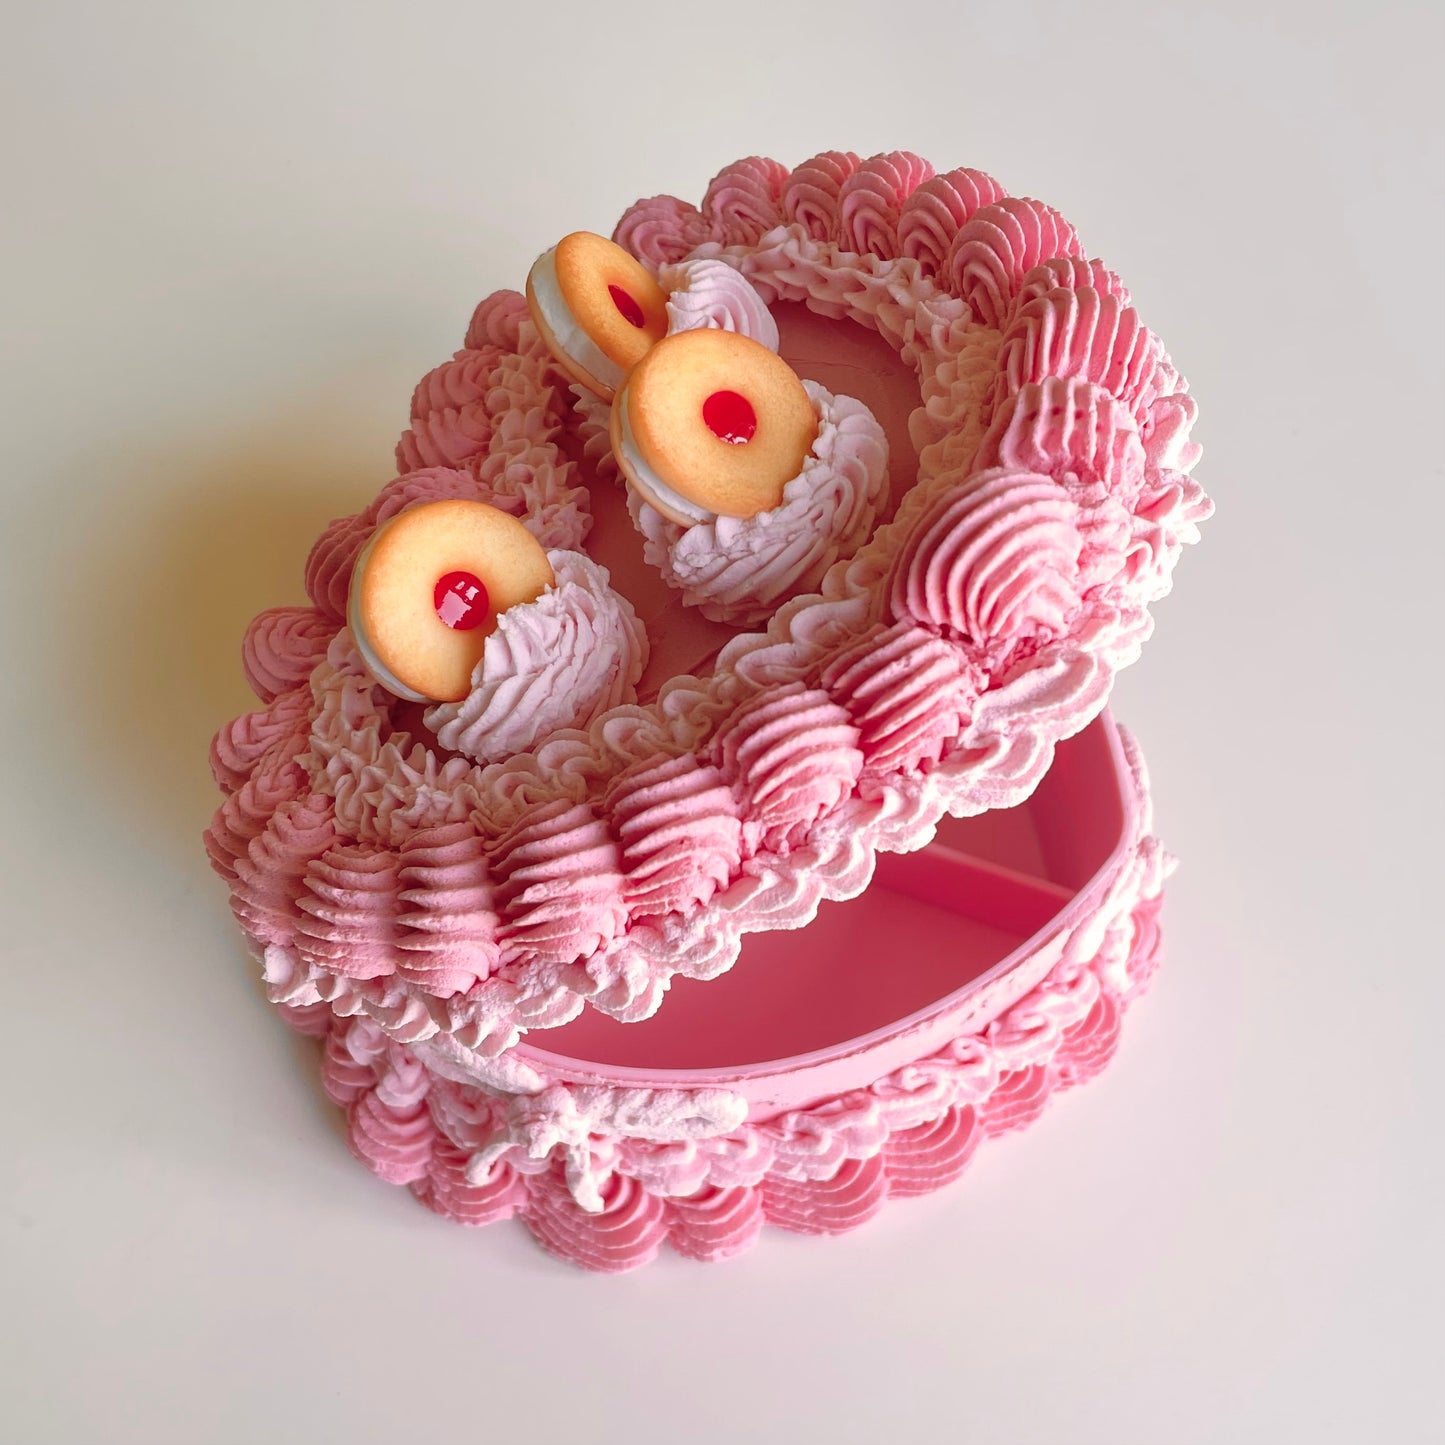 Fake cake heart trinket box